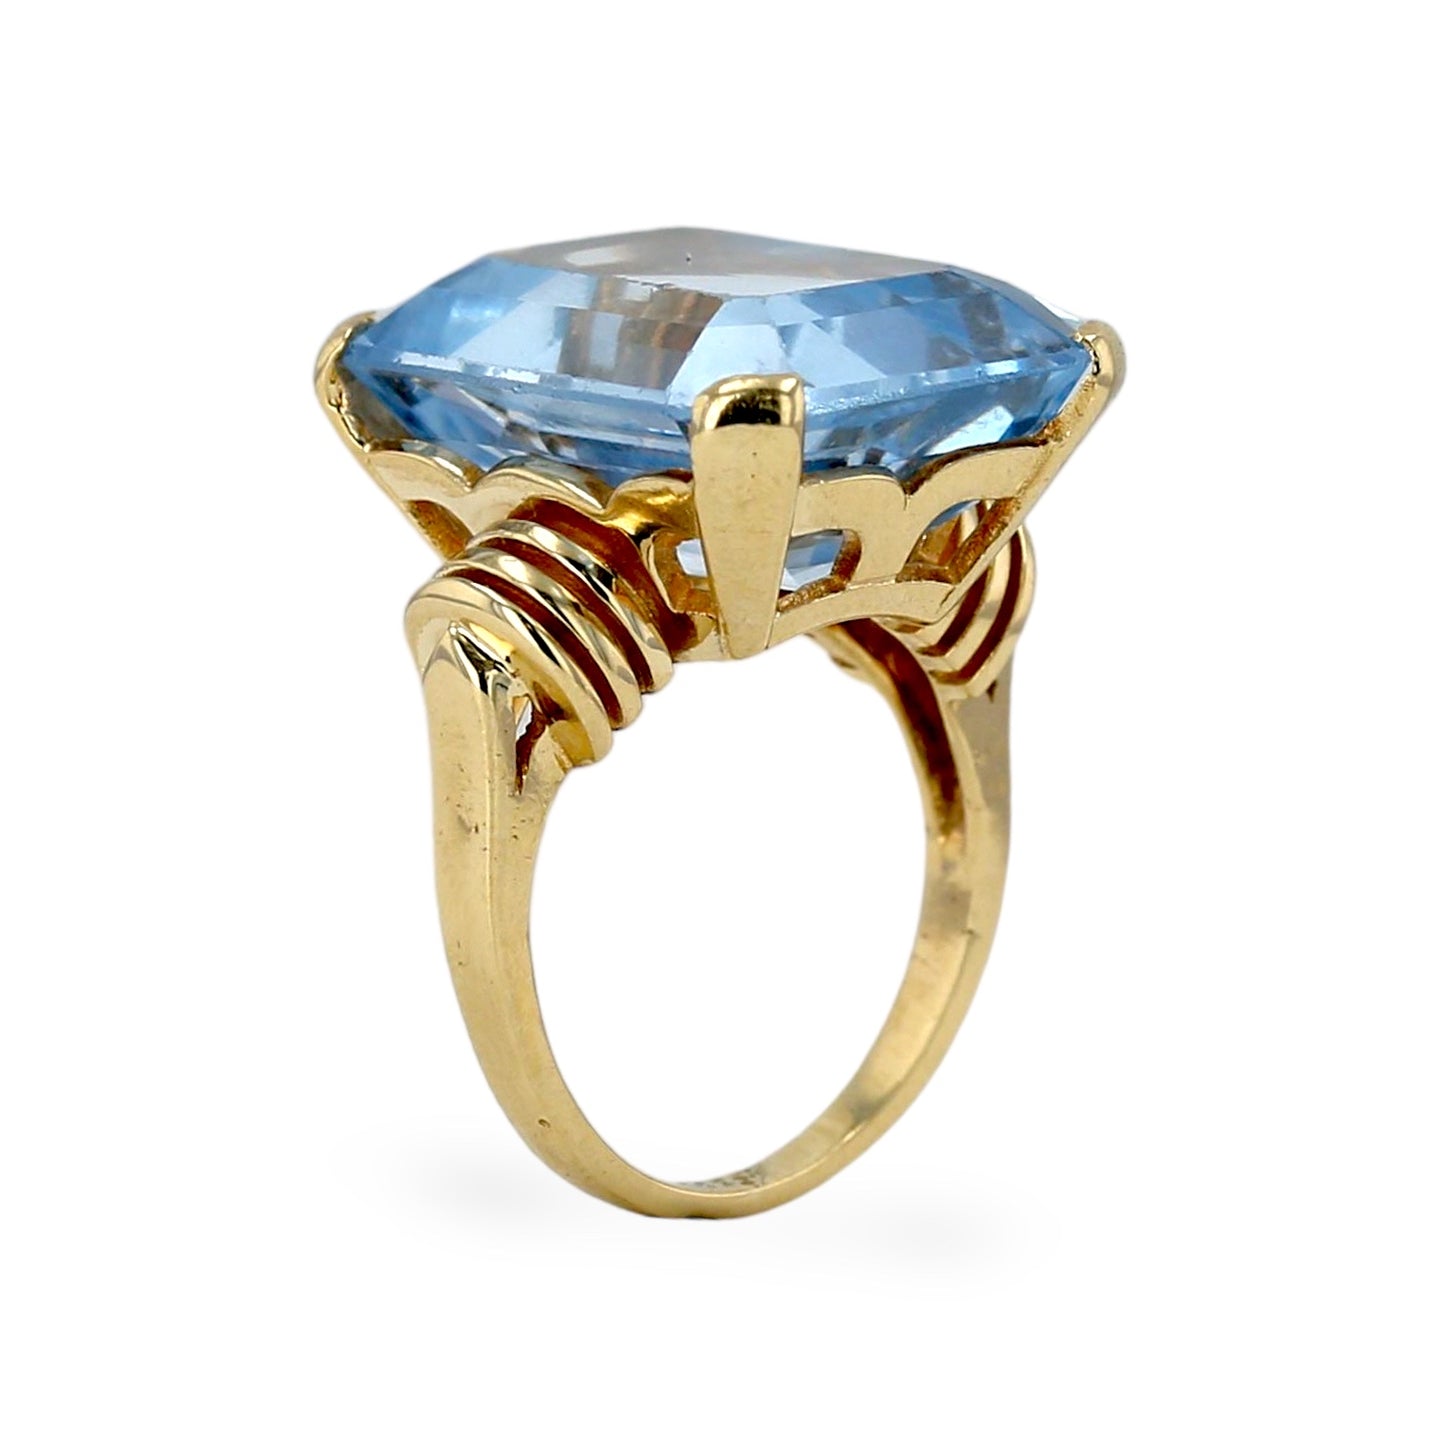 14K Yellow gold aqua marine emerald cut solid ring